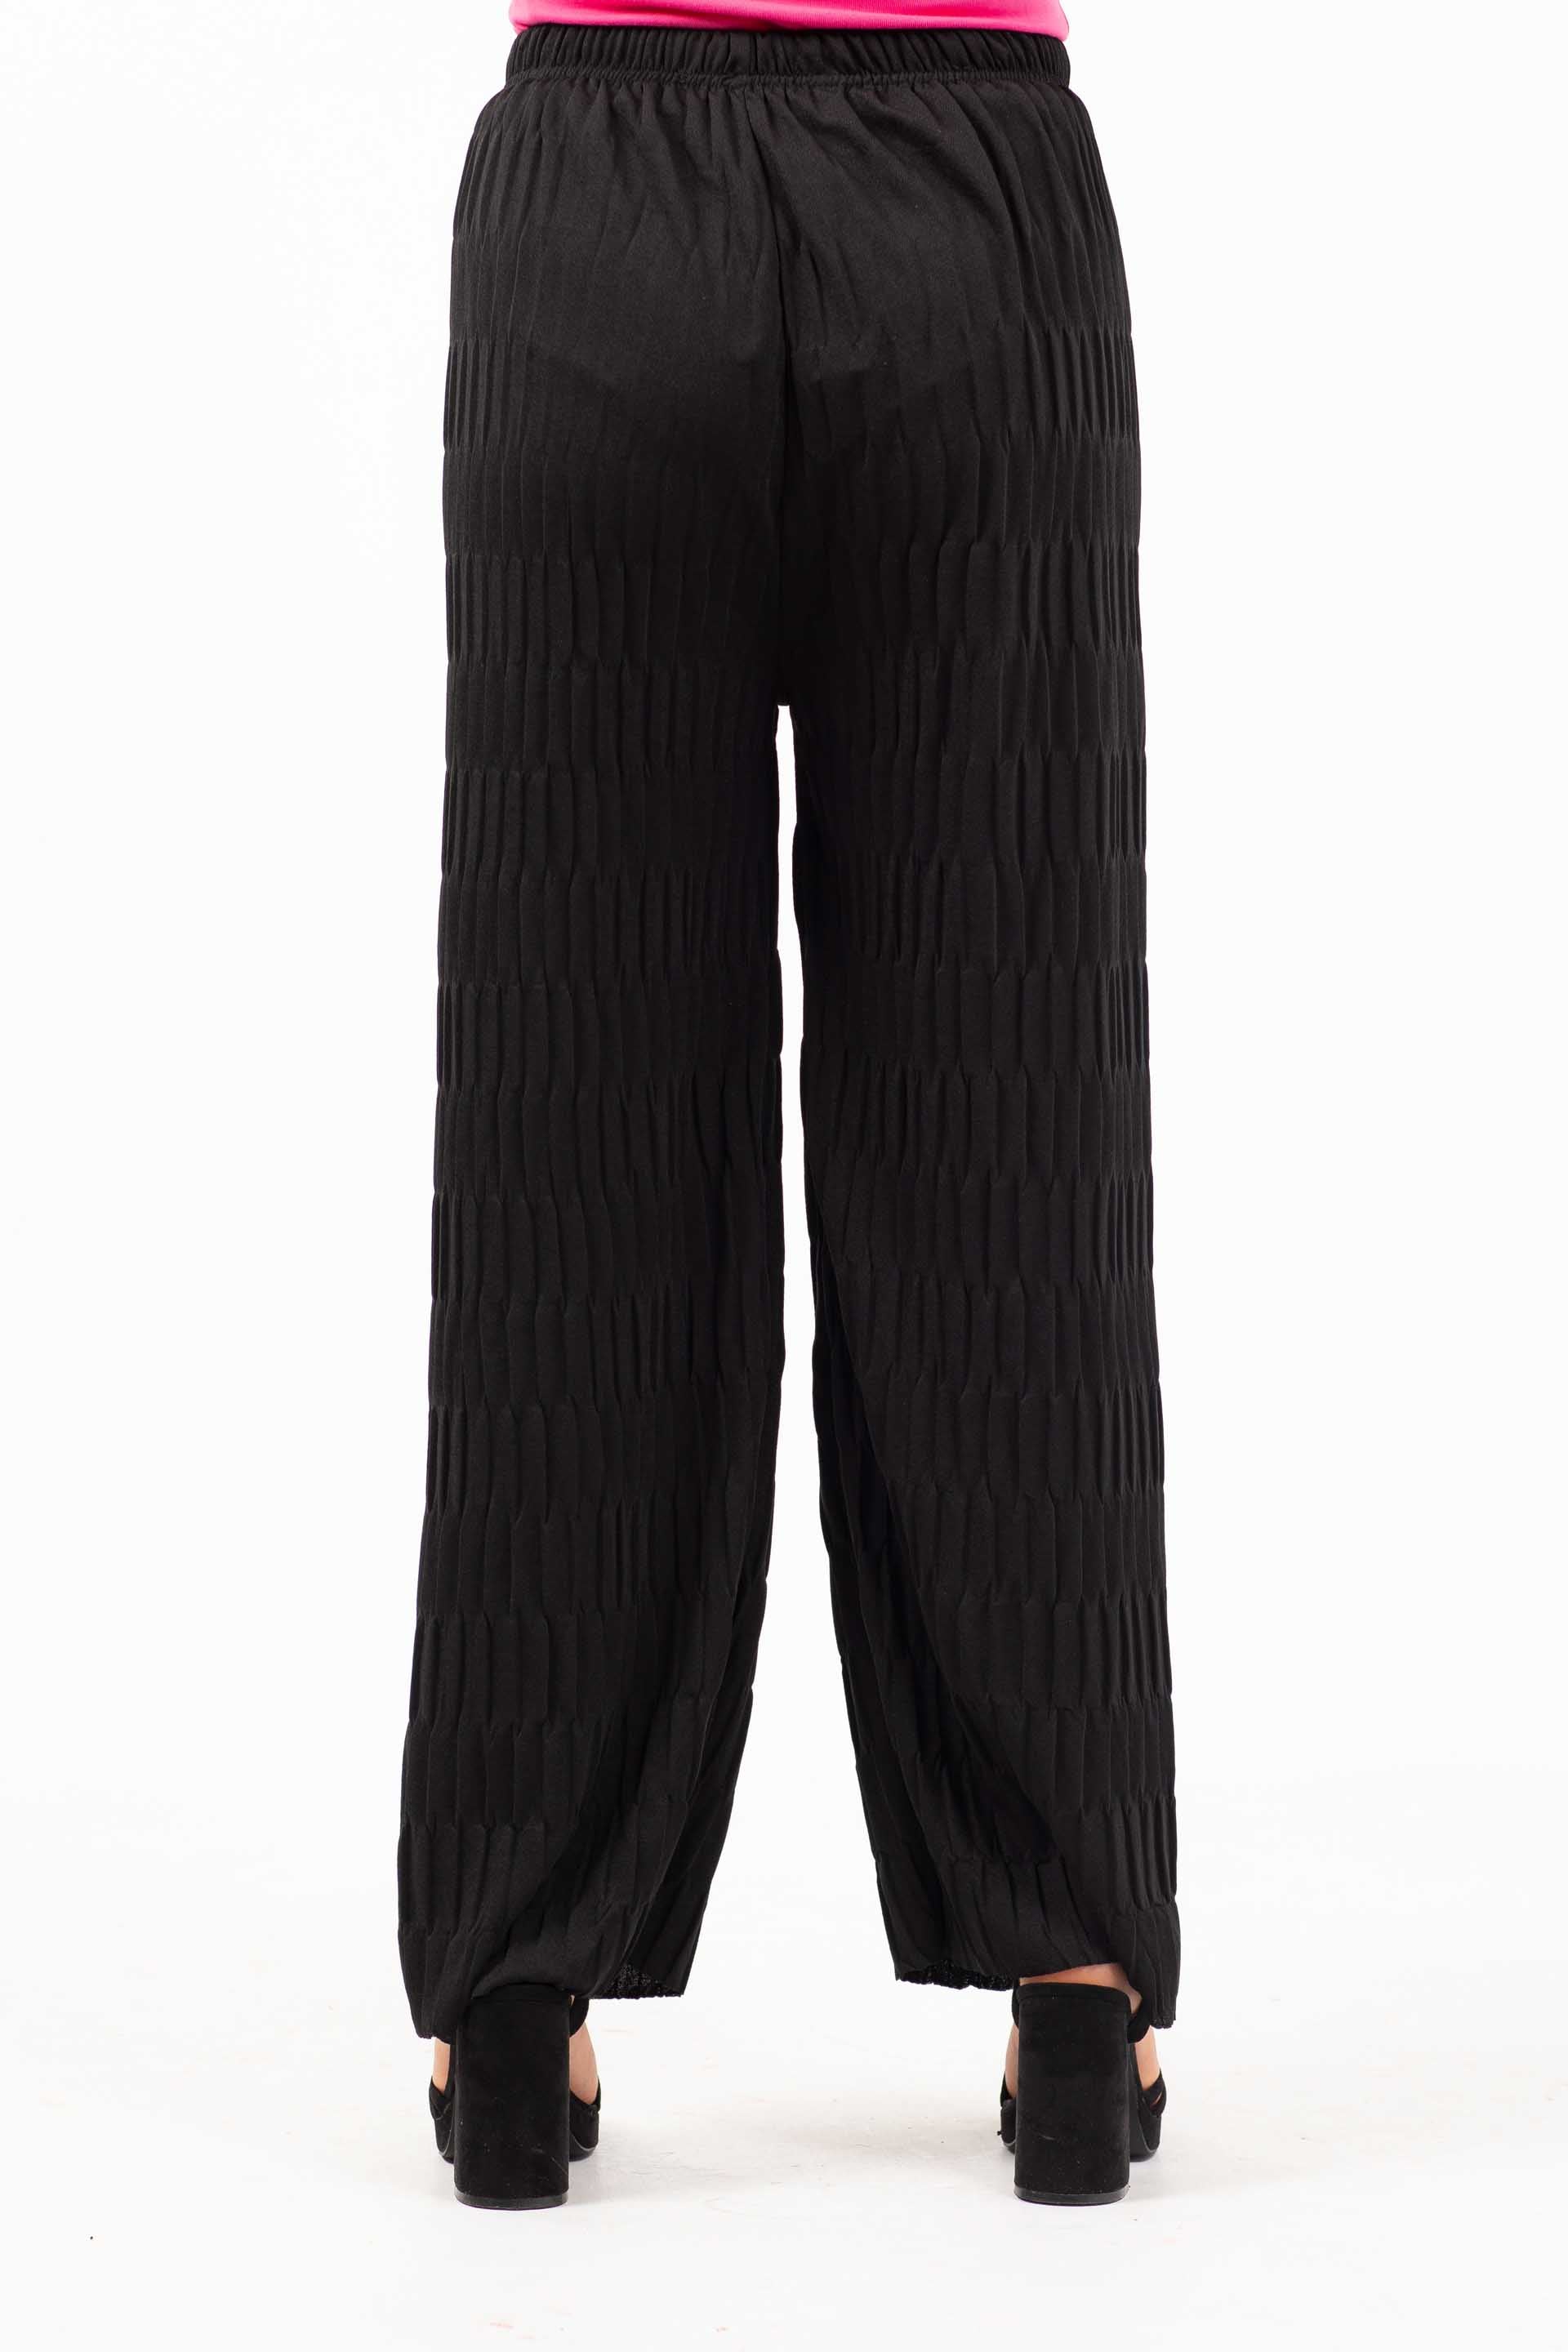 Textured Pants Black